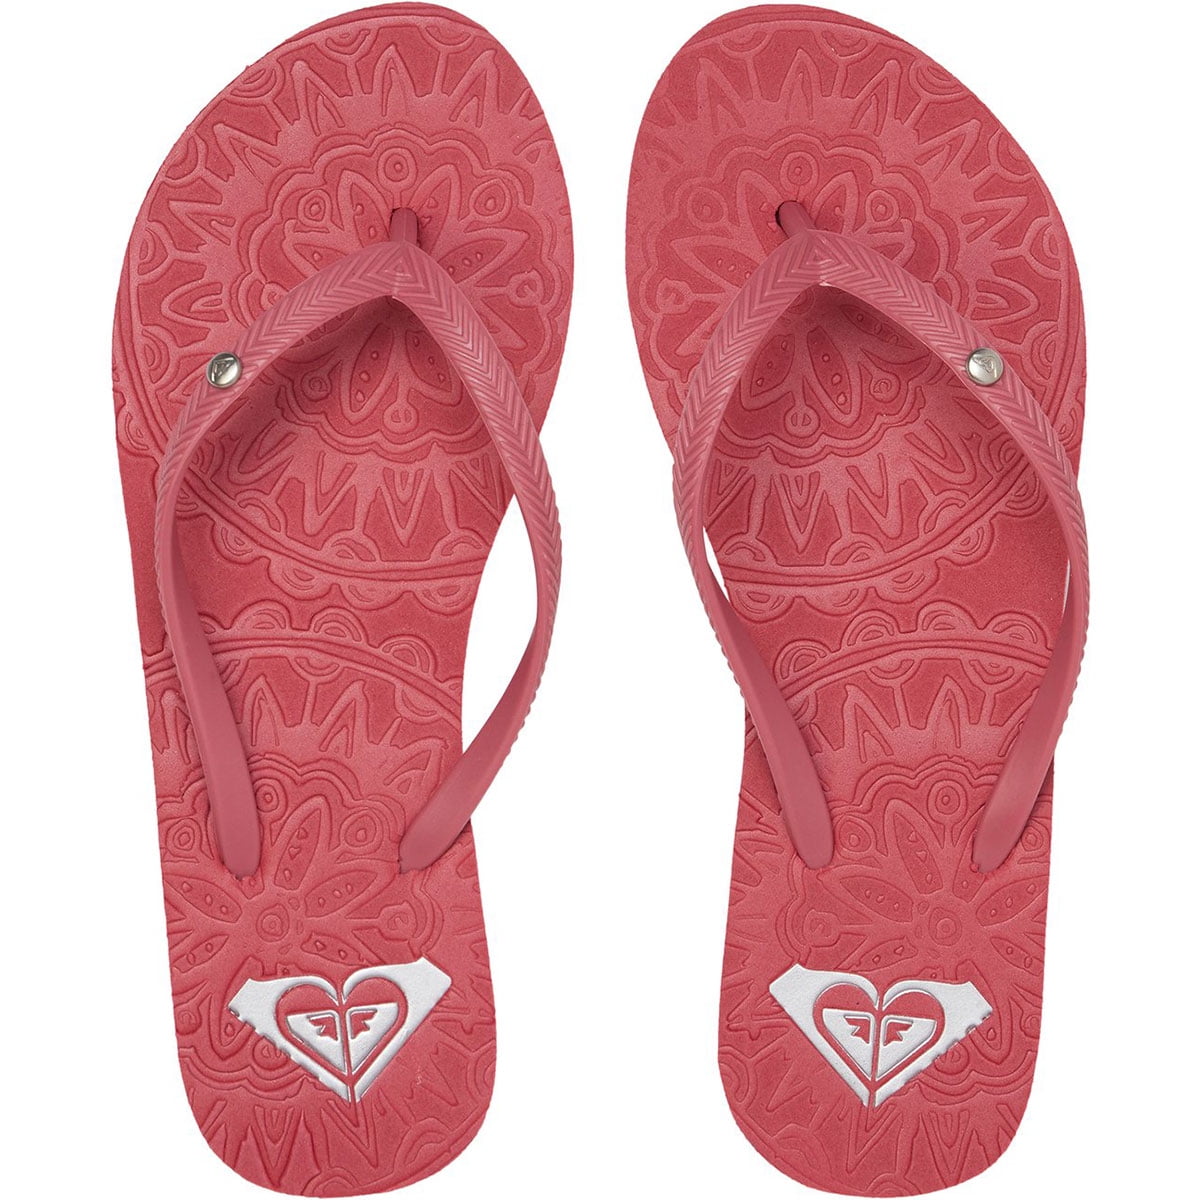 Roxy Women's Antilles Sandals - Walmart.com